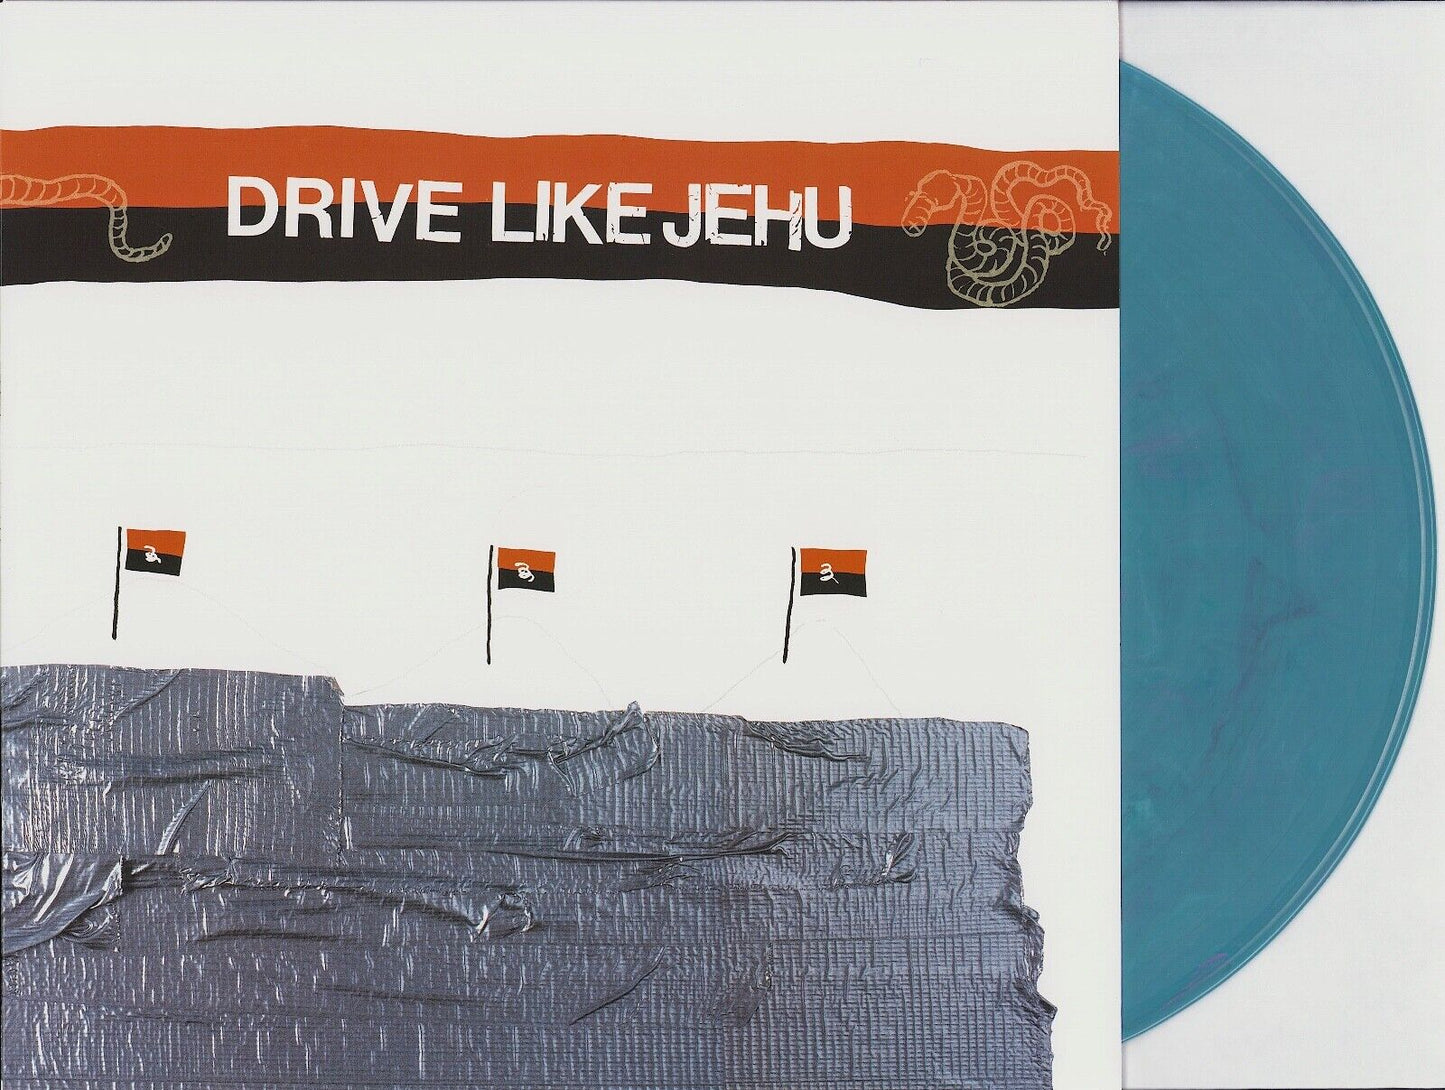 Drive Like Jehu - Drive Like Jehu Green Marbled Vinyl LP Limited Edition